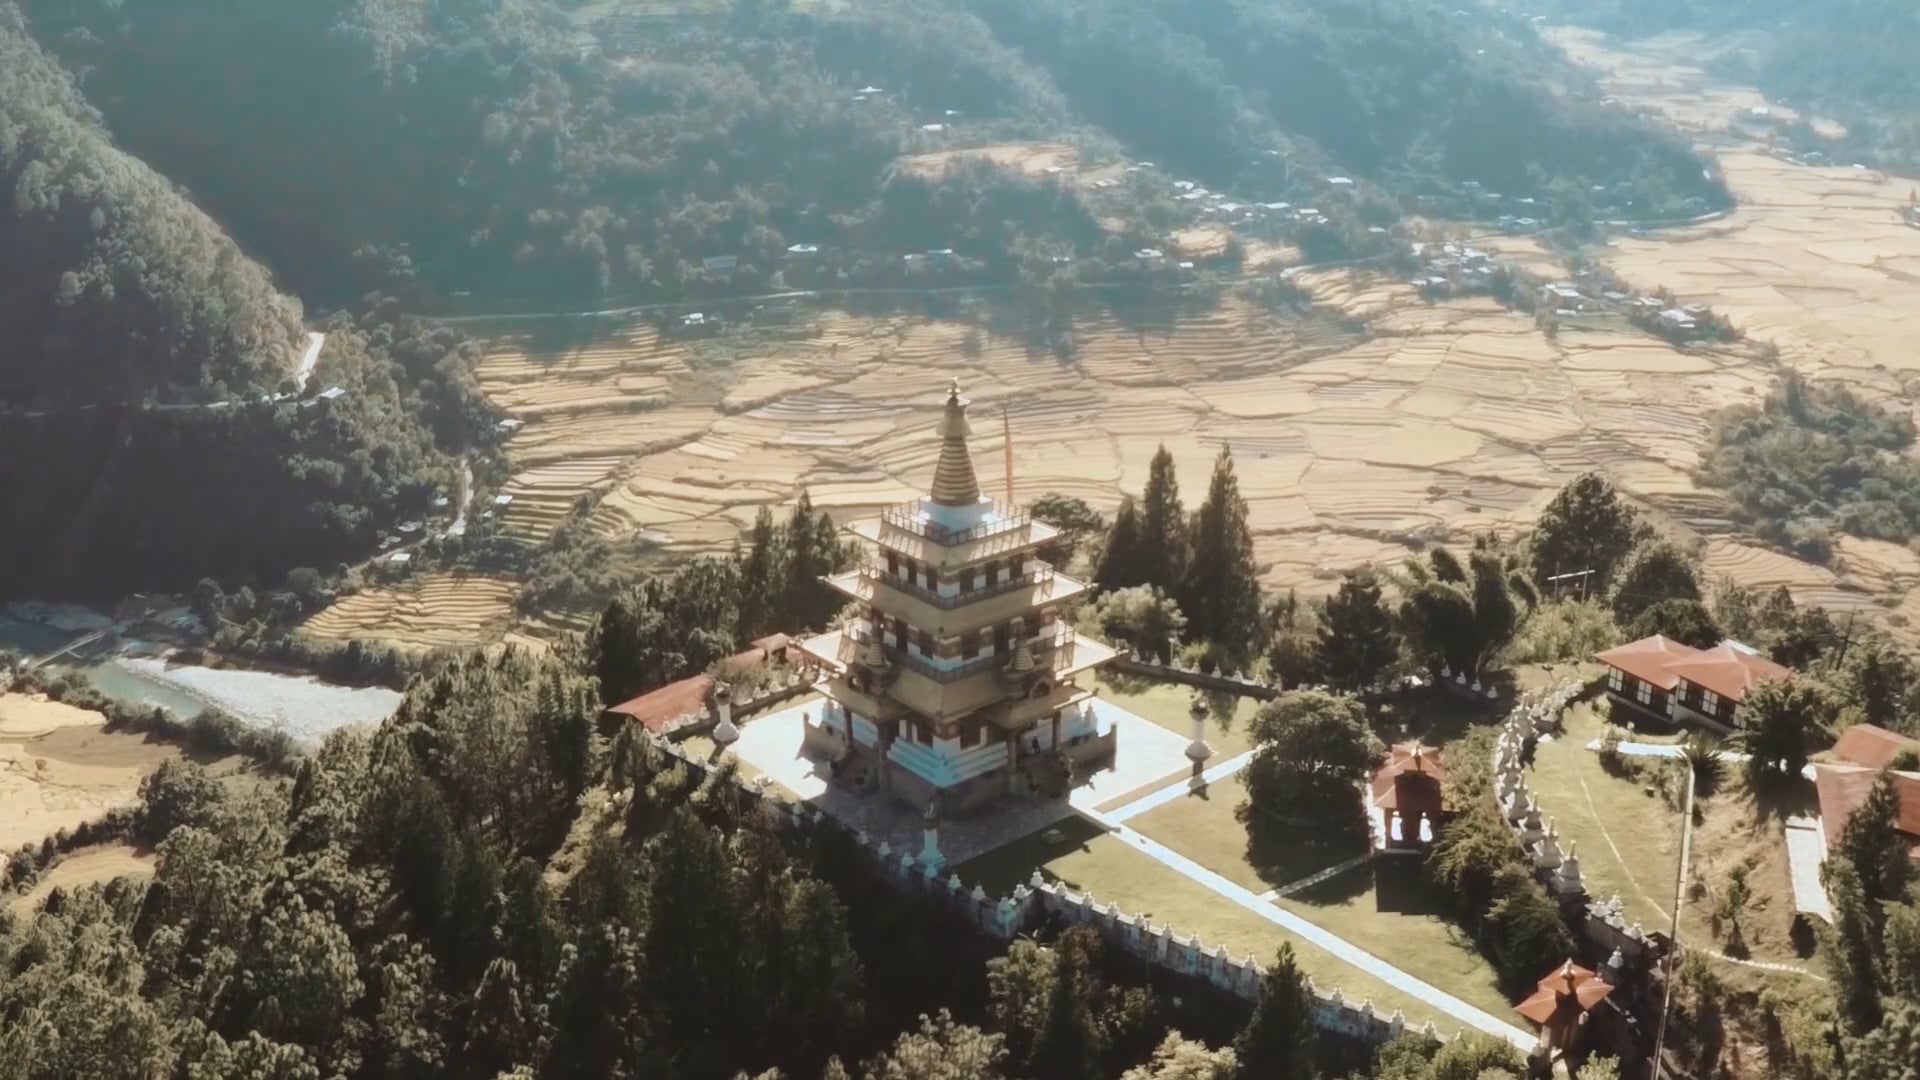 Glimpse of Bhutan 2018